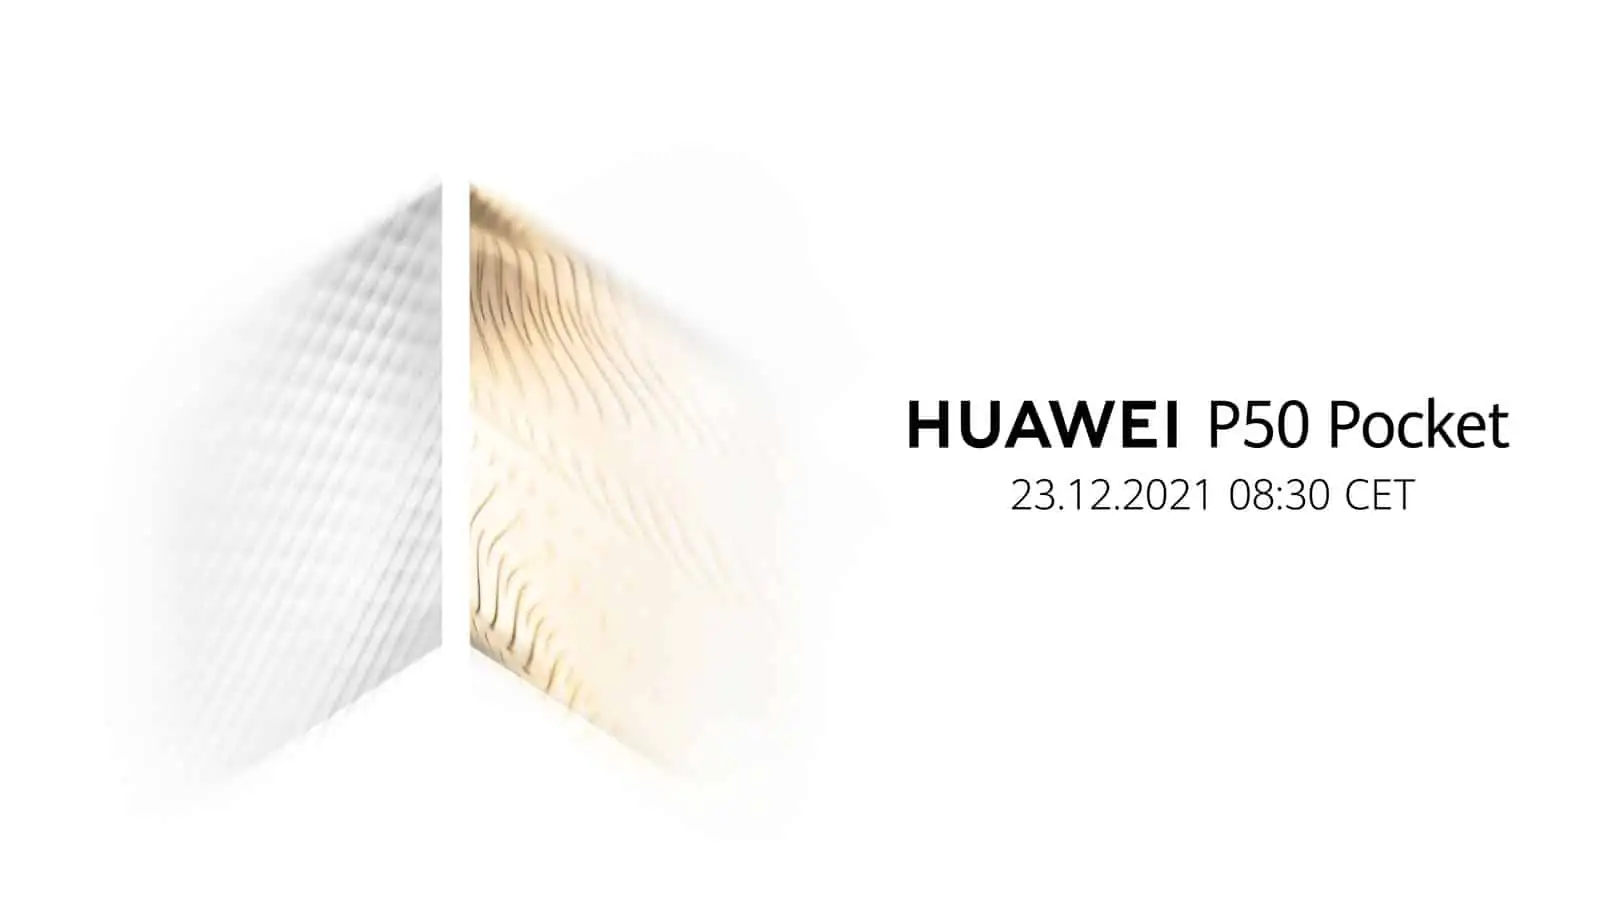 Huawei P50 Pocket launch announcement